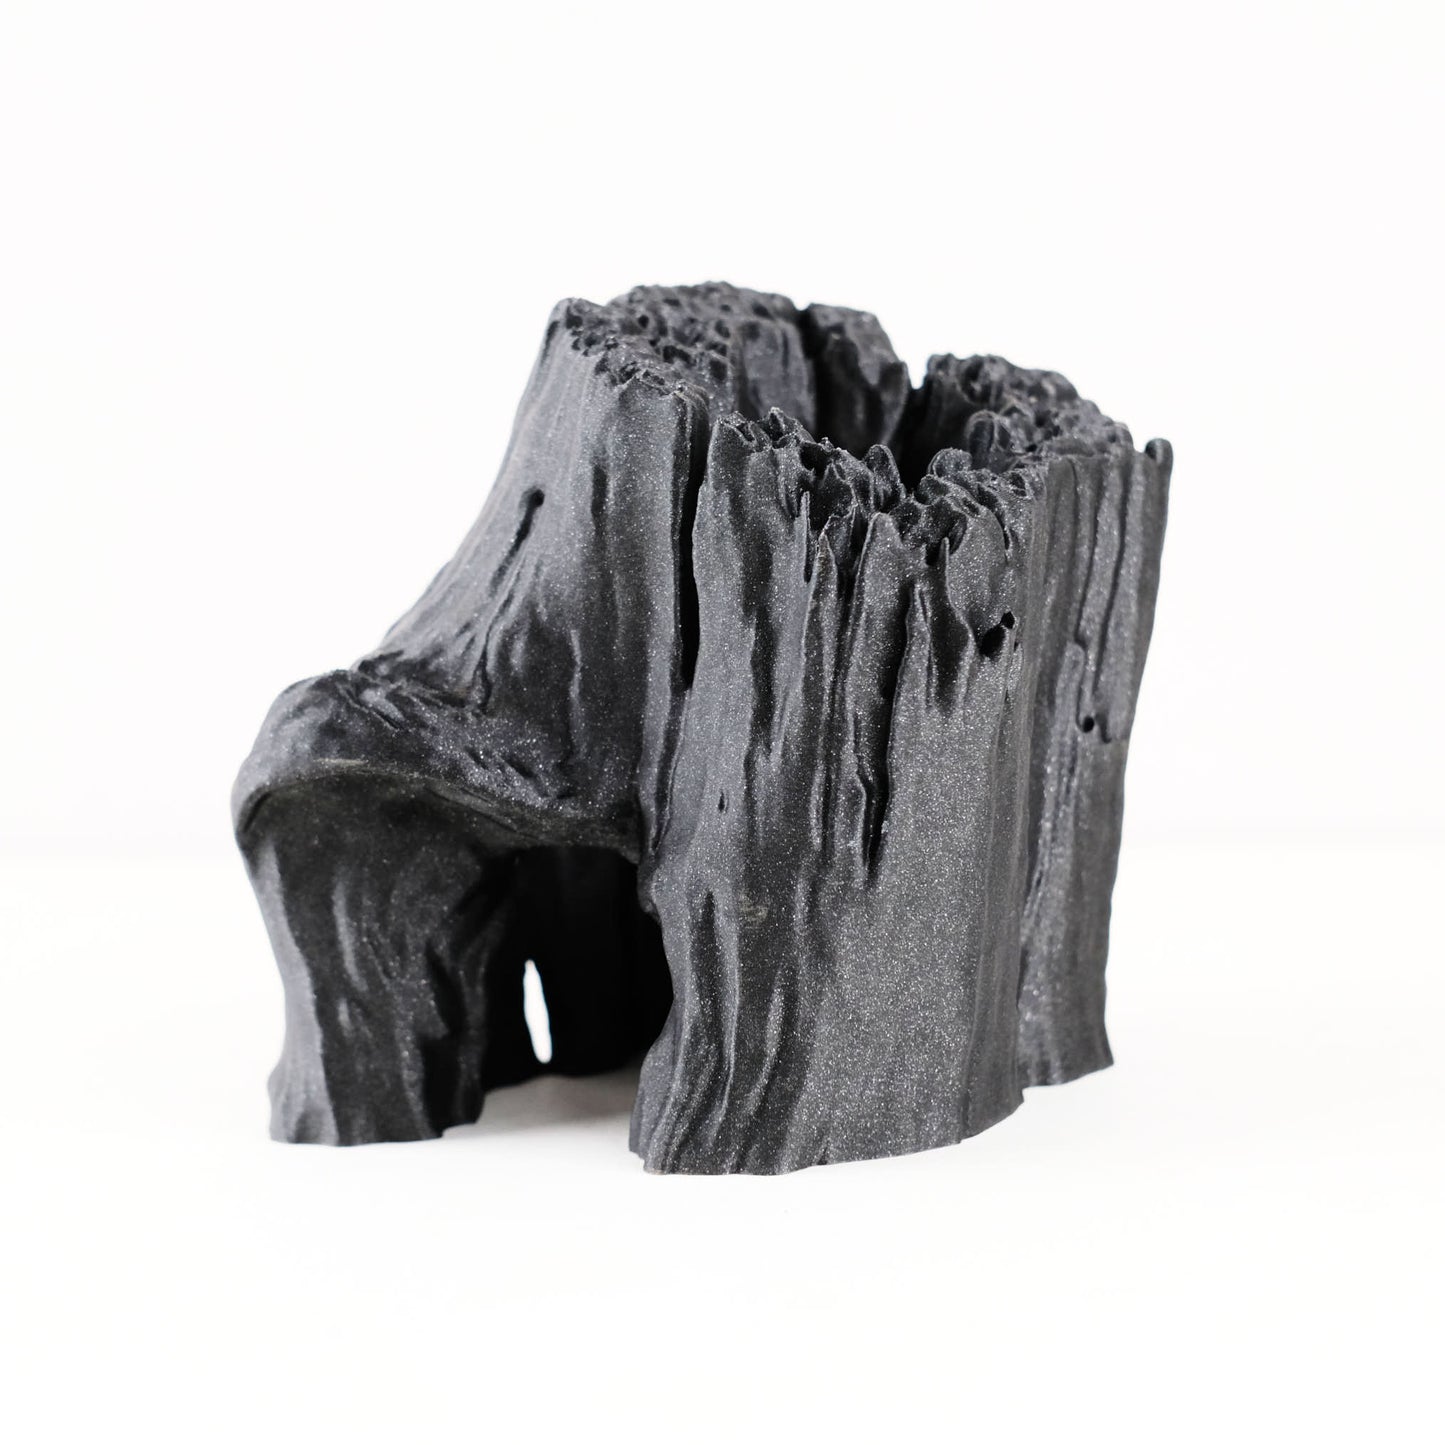 3D Printed Manzanita Stump